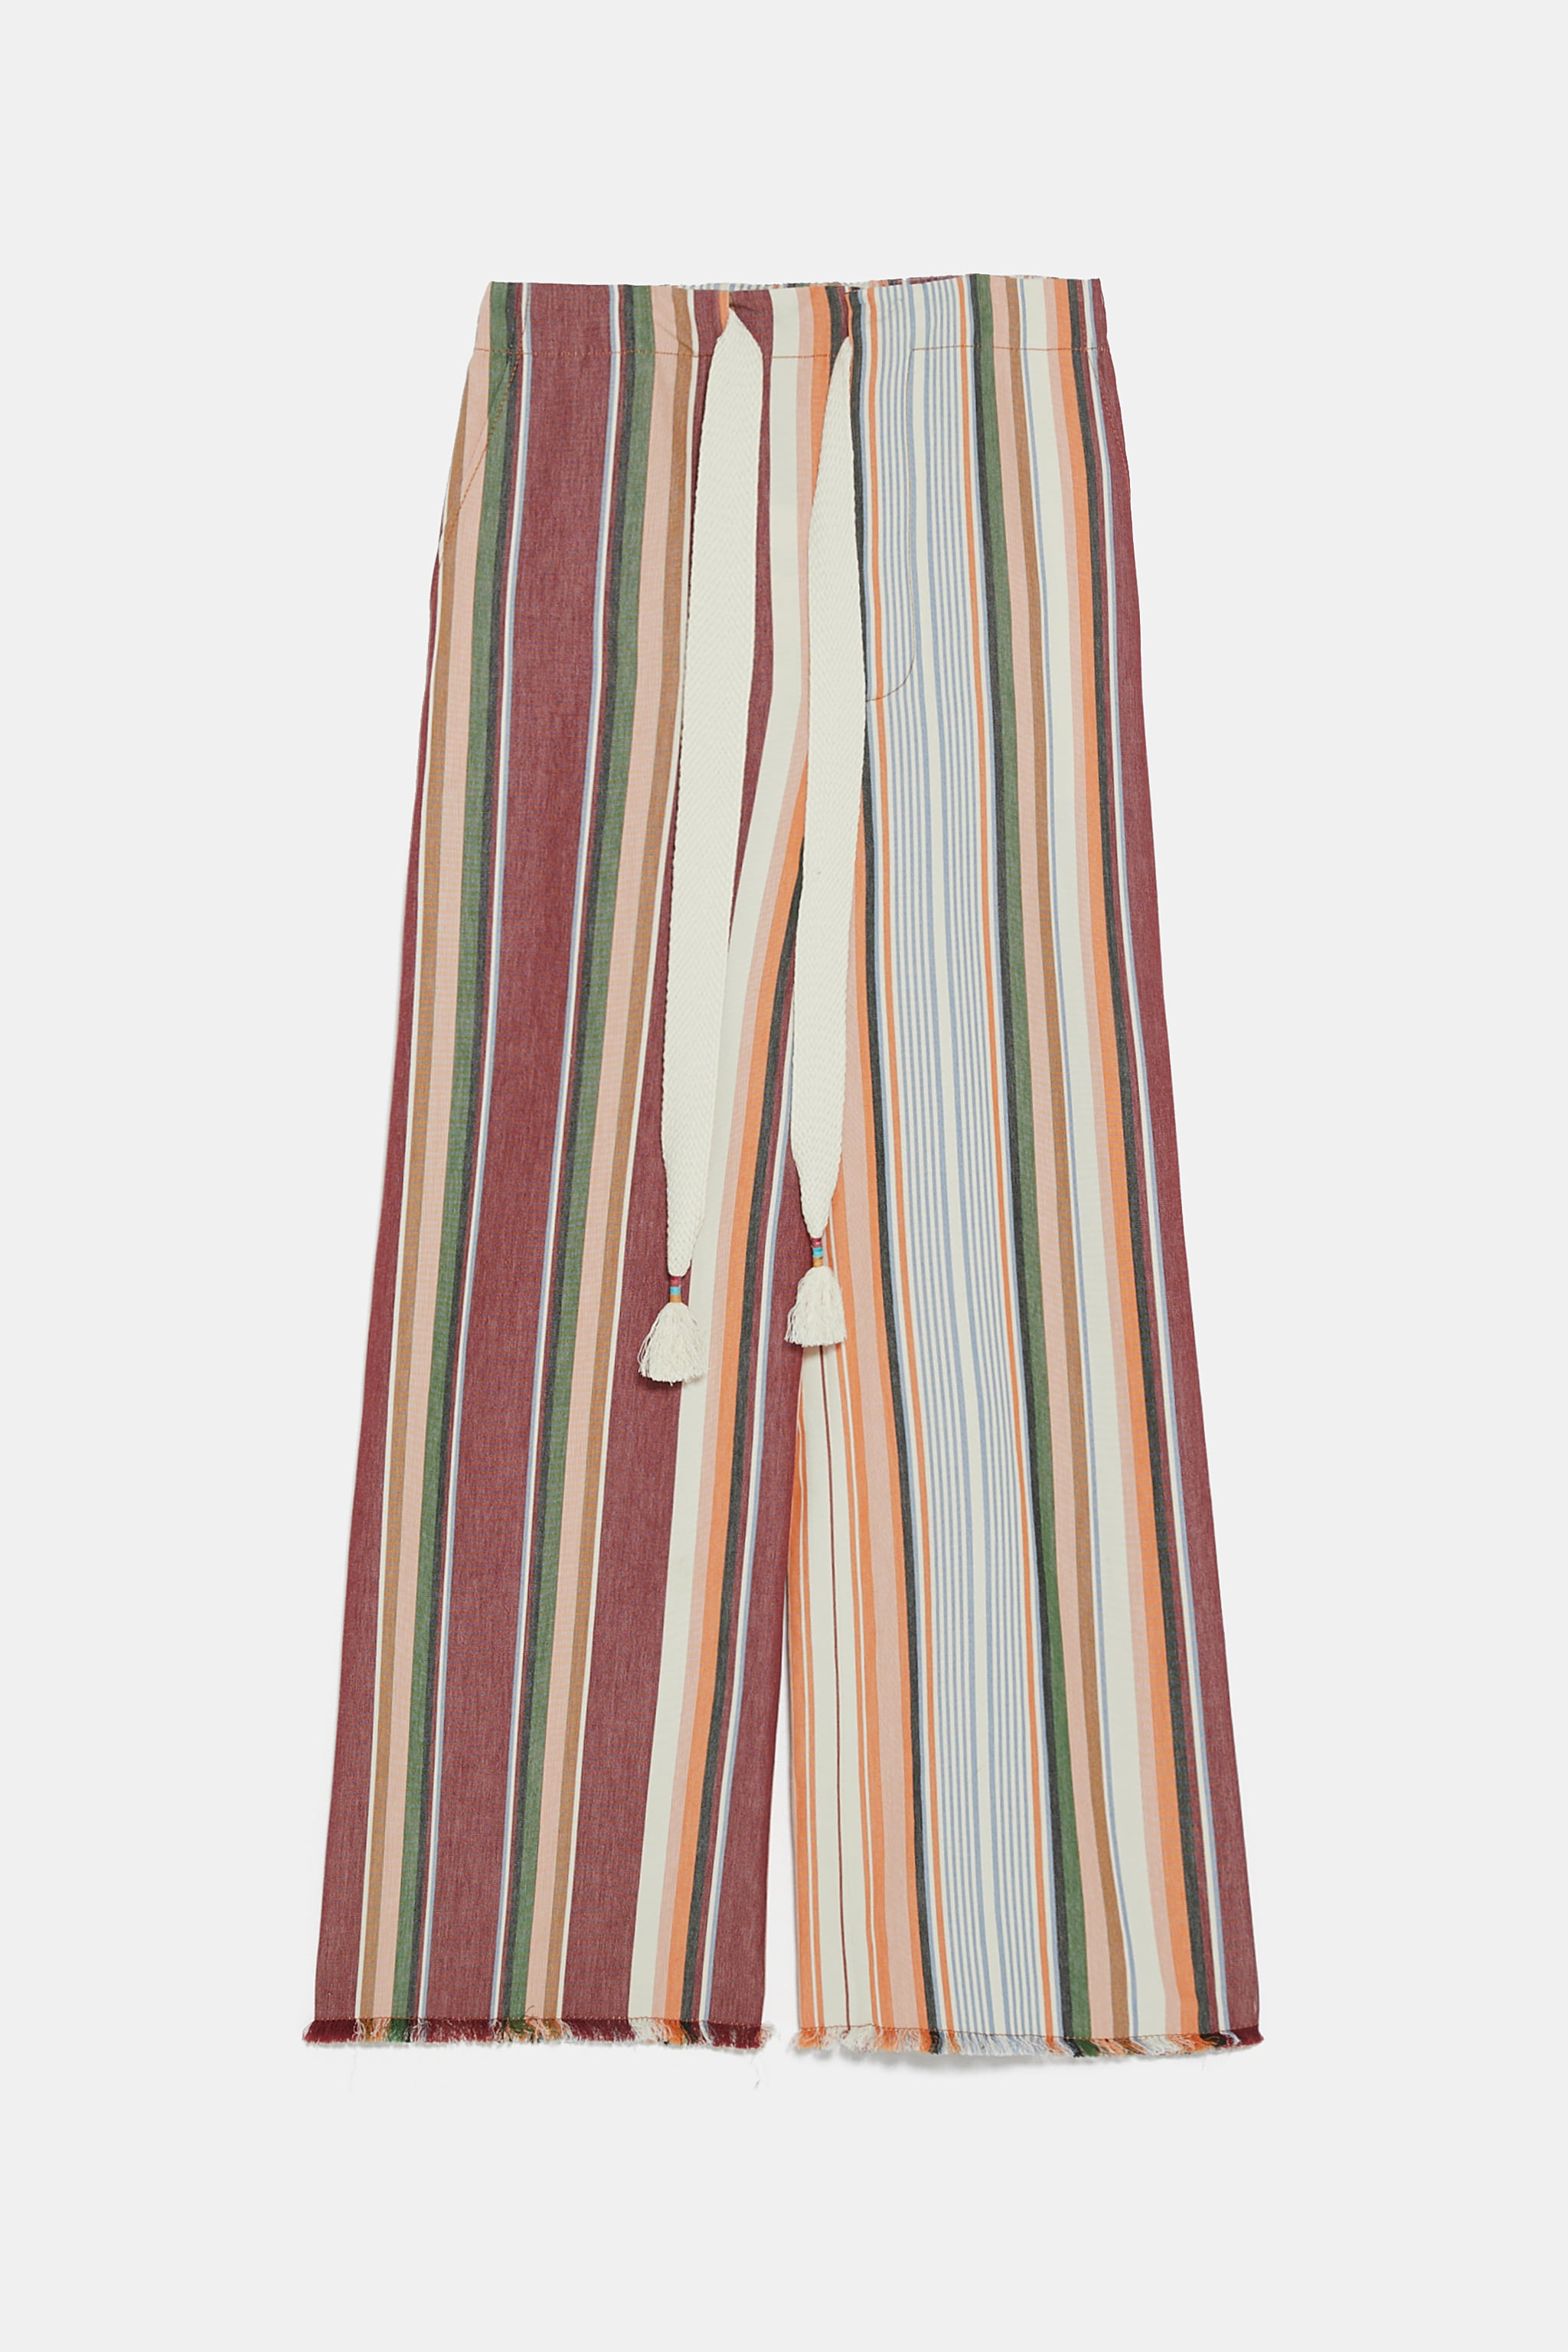 zara studio striped dress